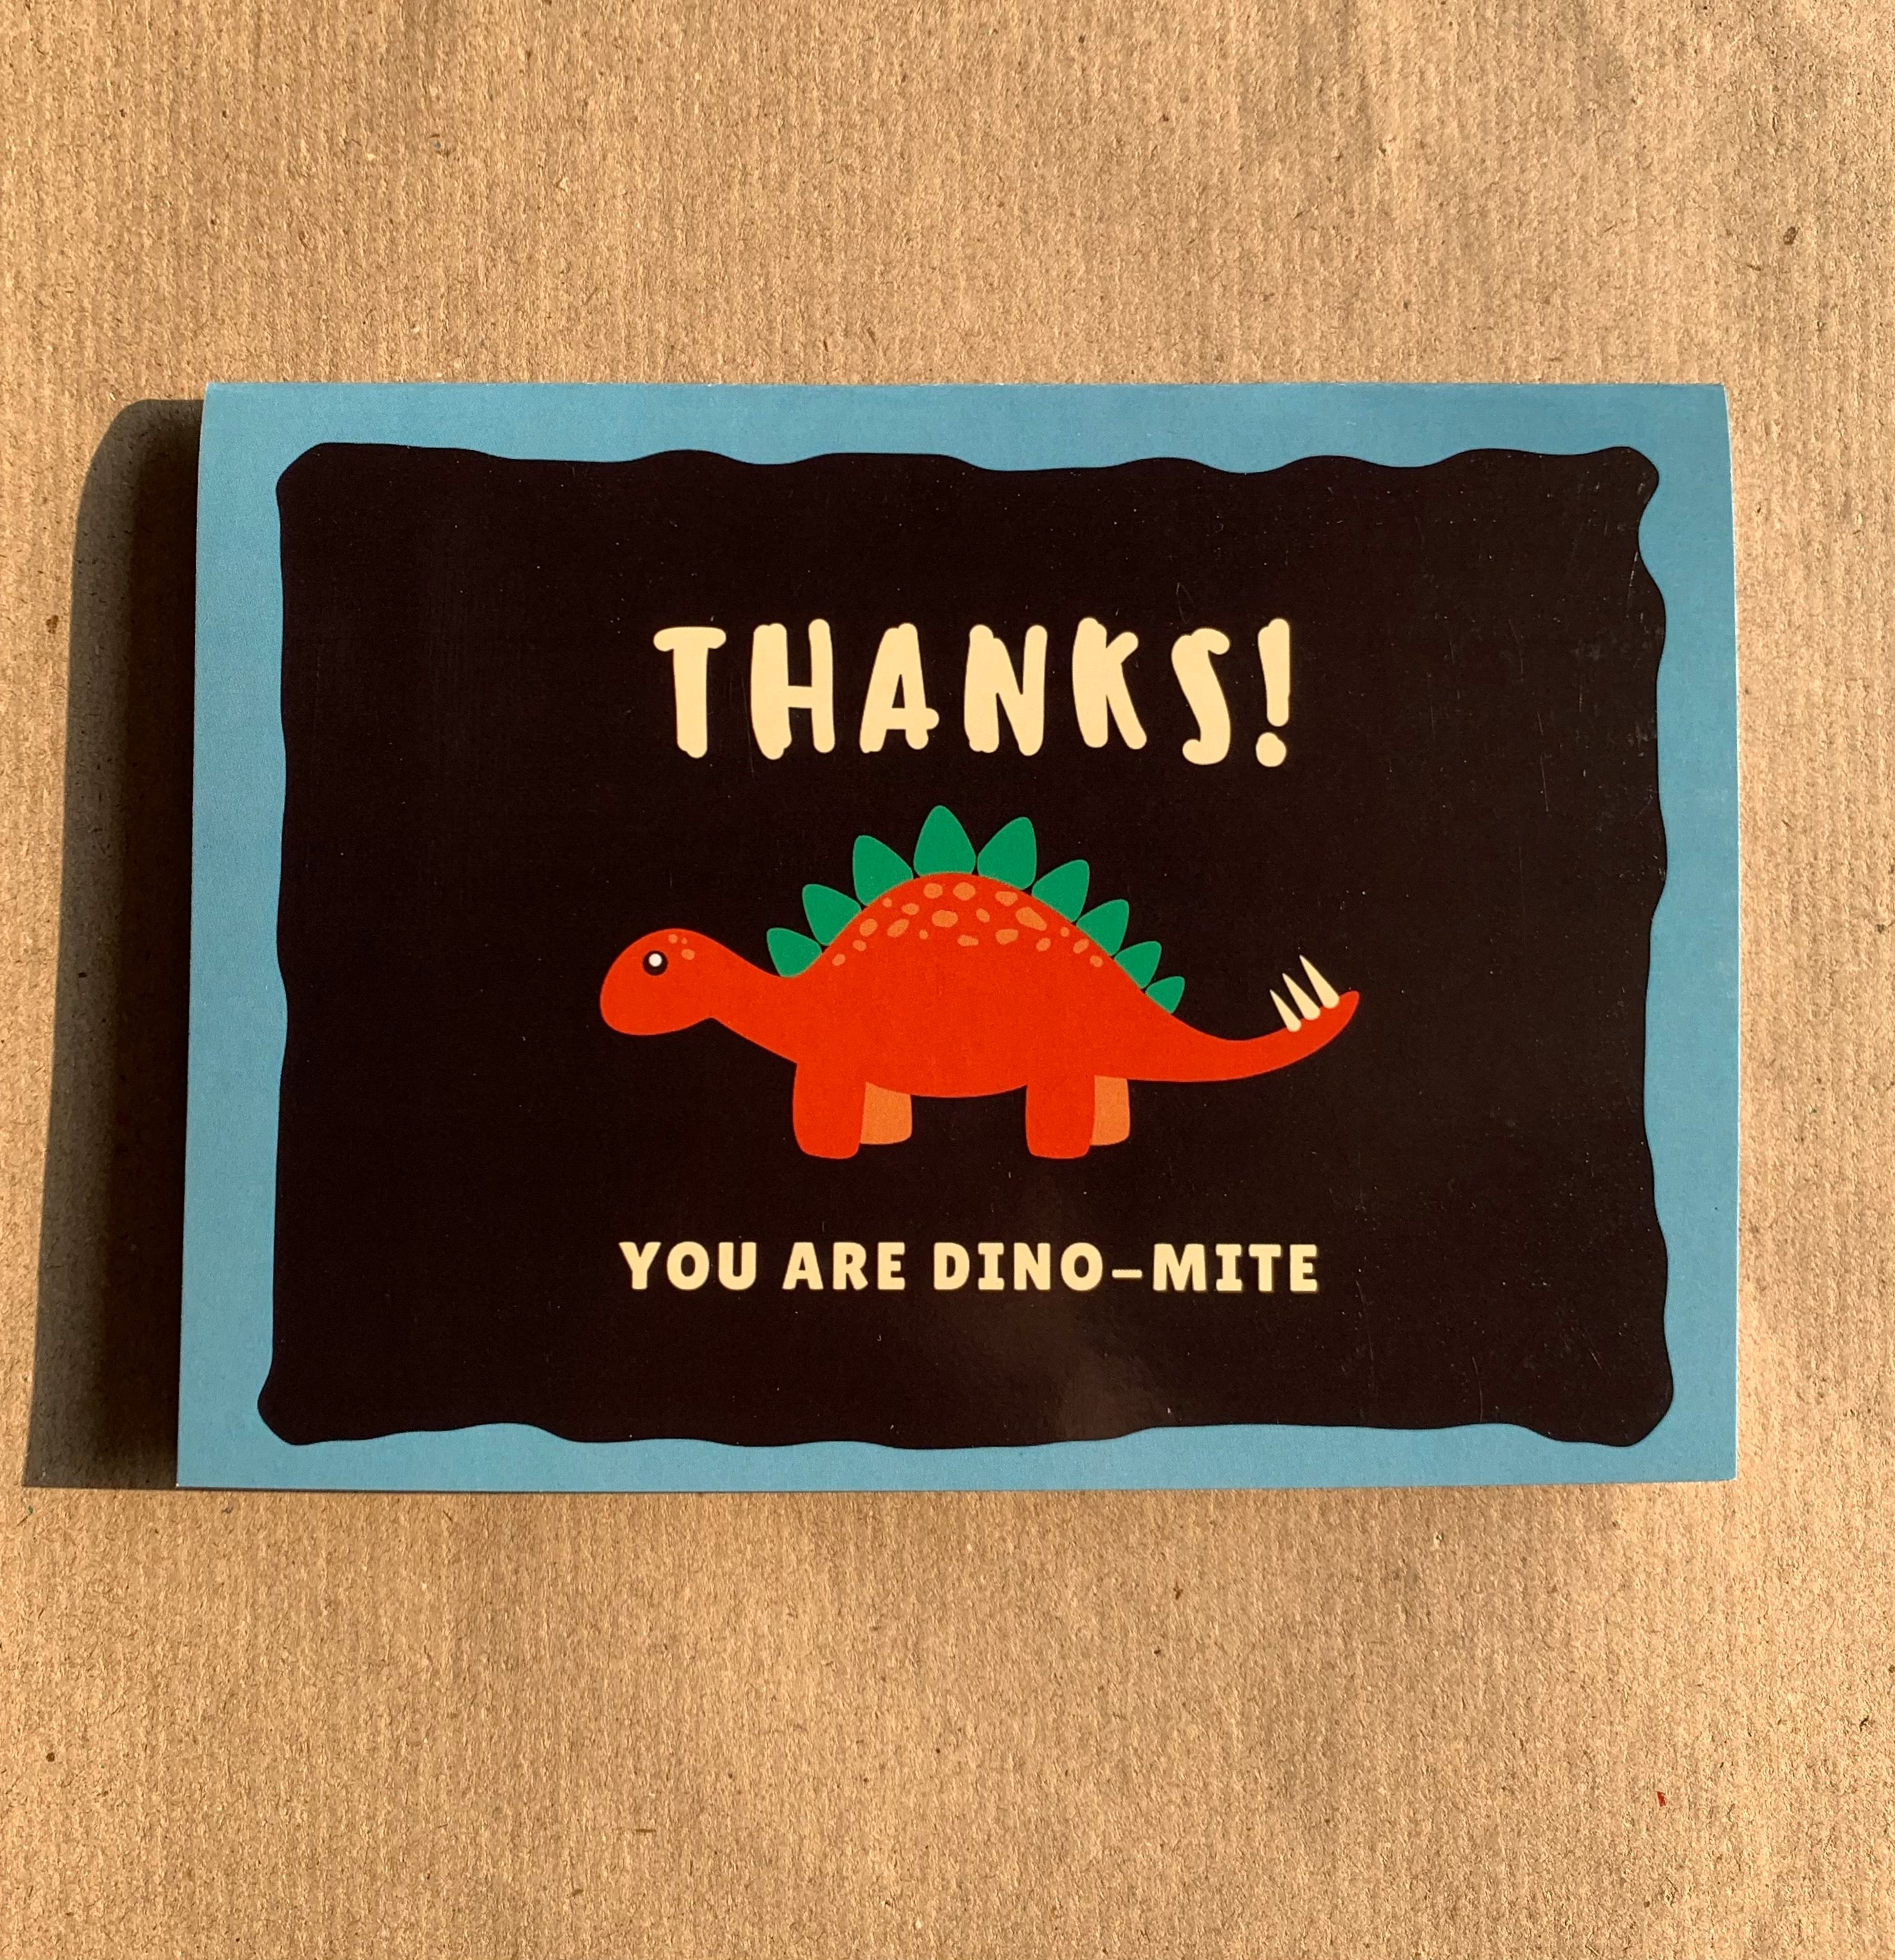 You are Dino-mite card